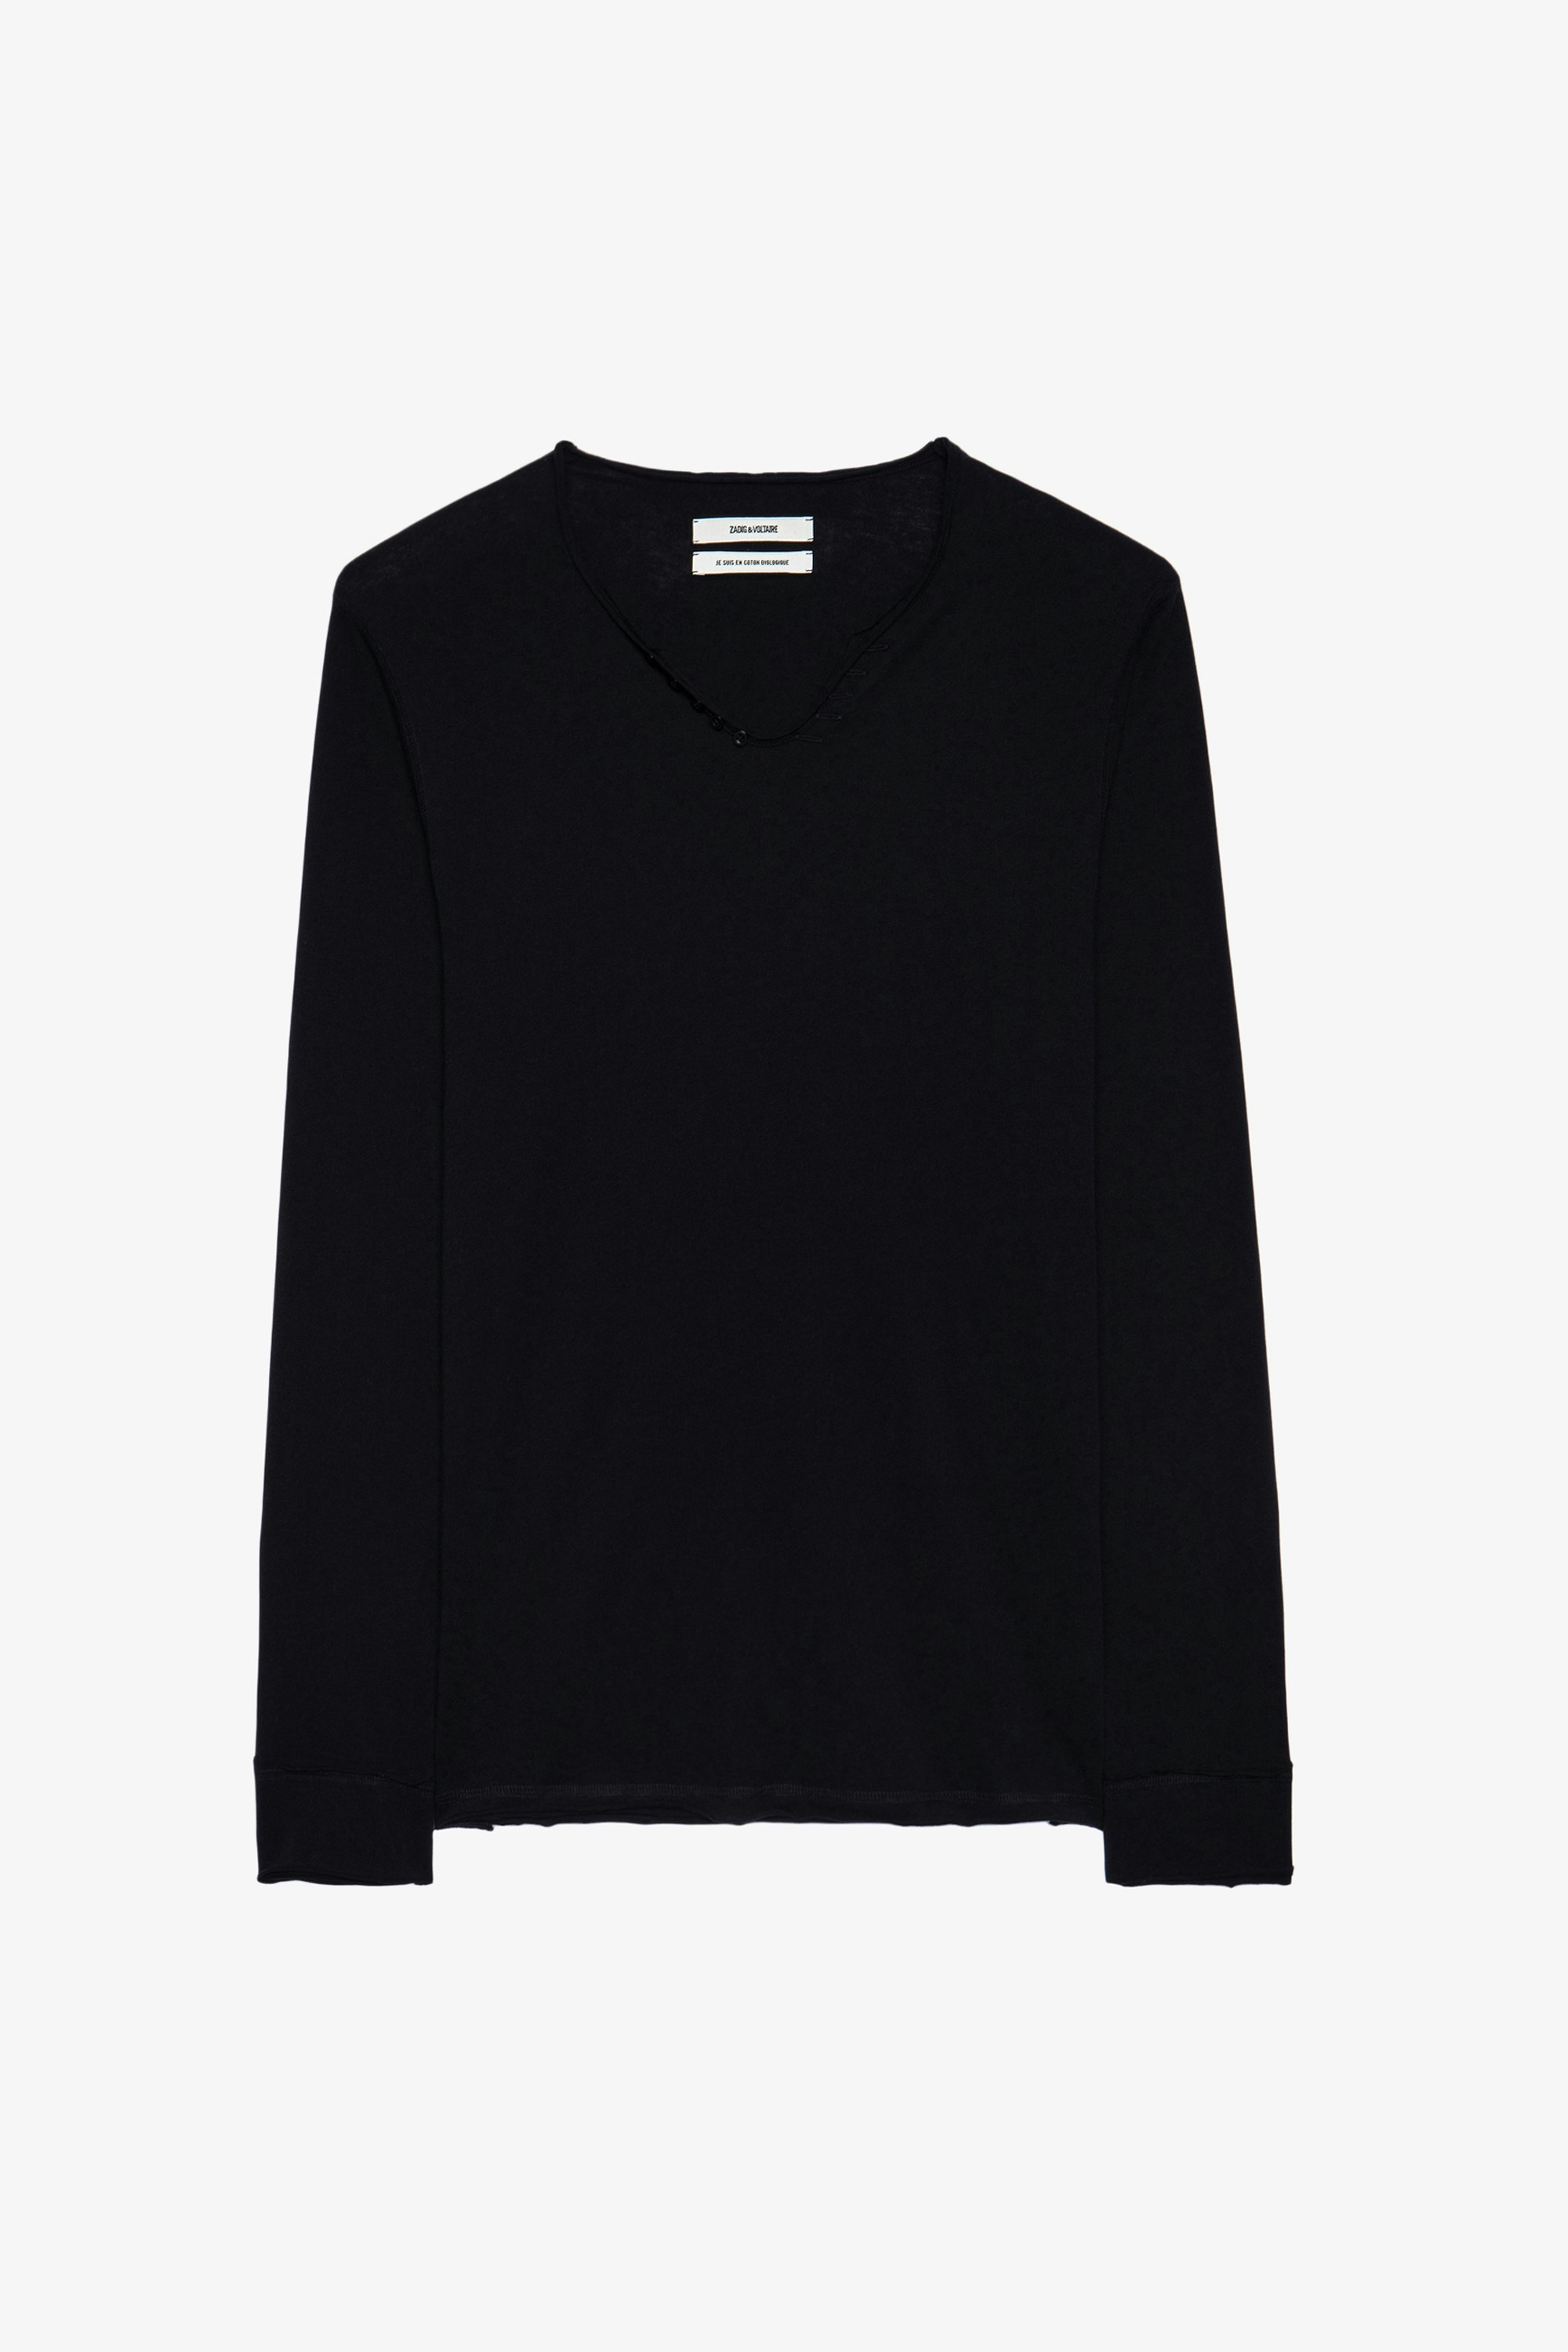 Monastir T-shirt Men’s black cotton henley T-shirt